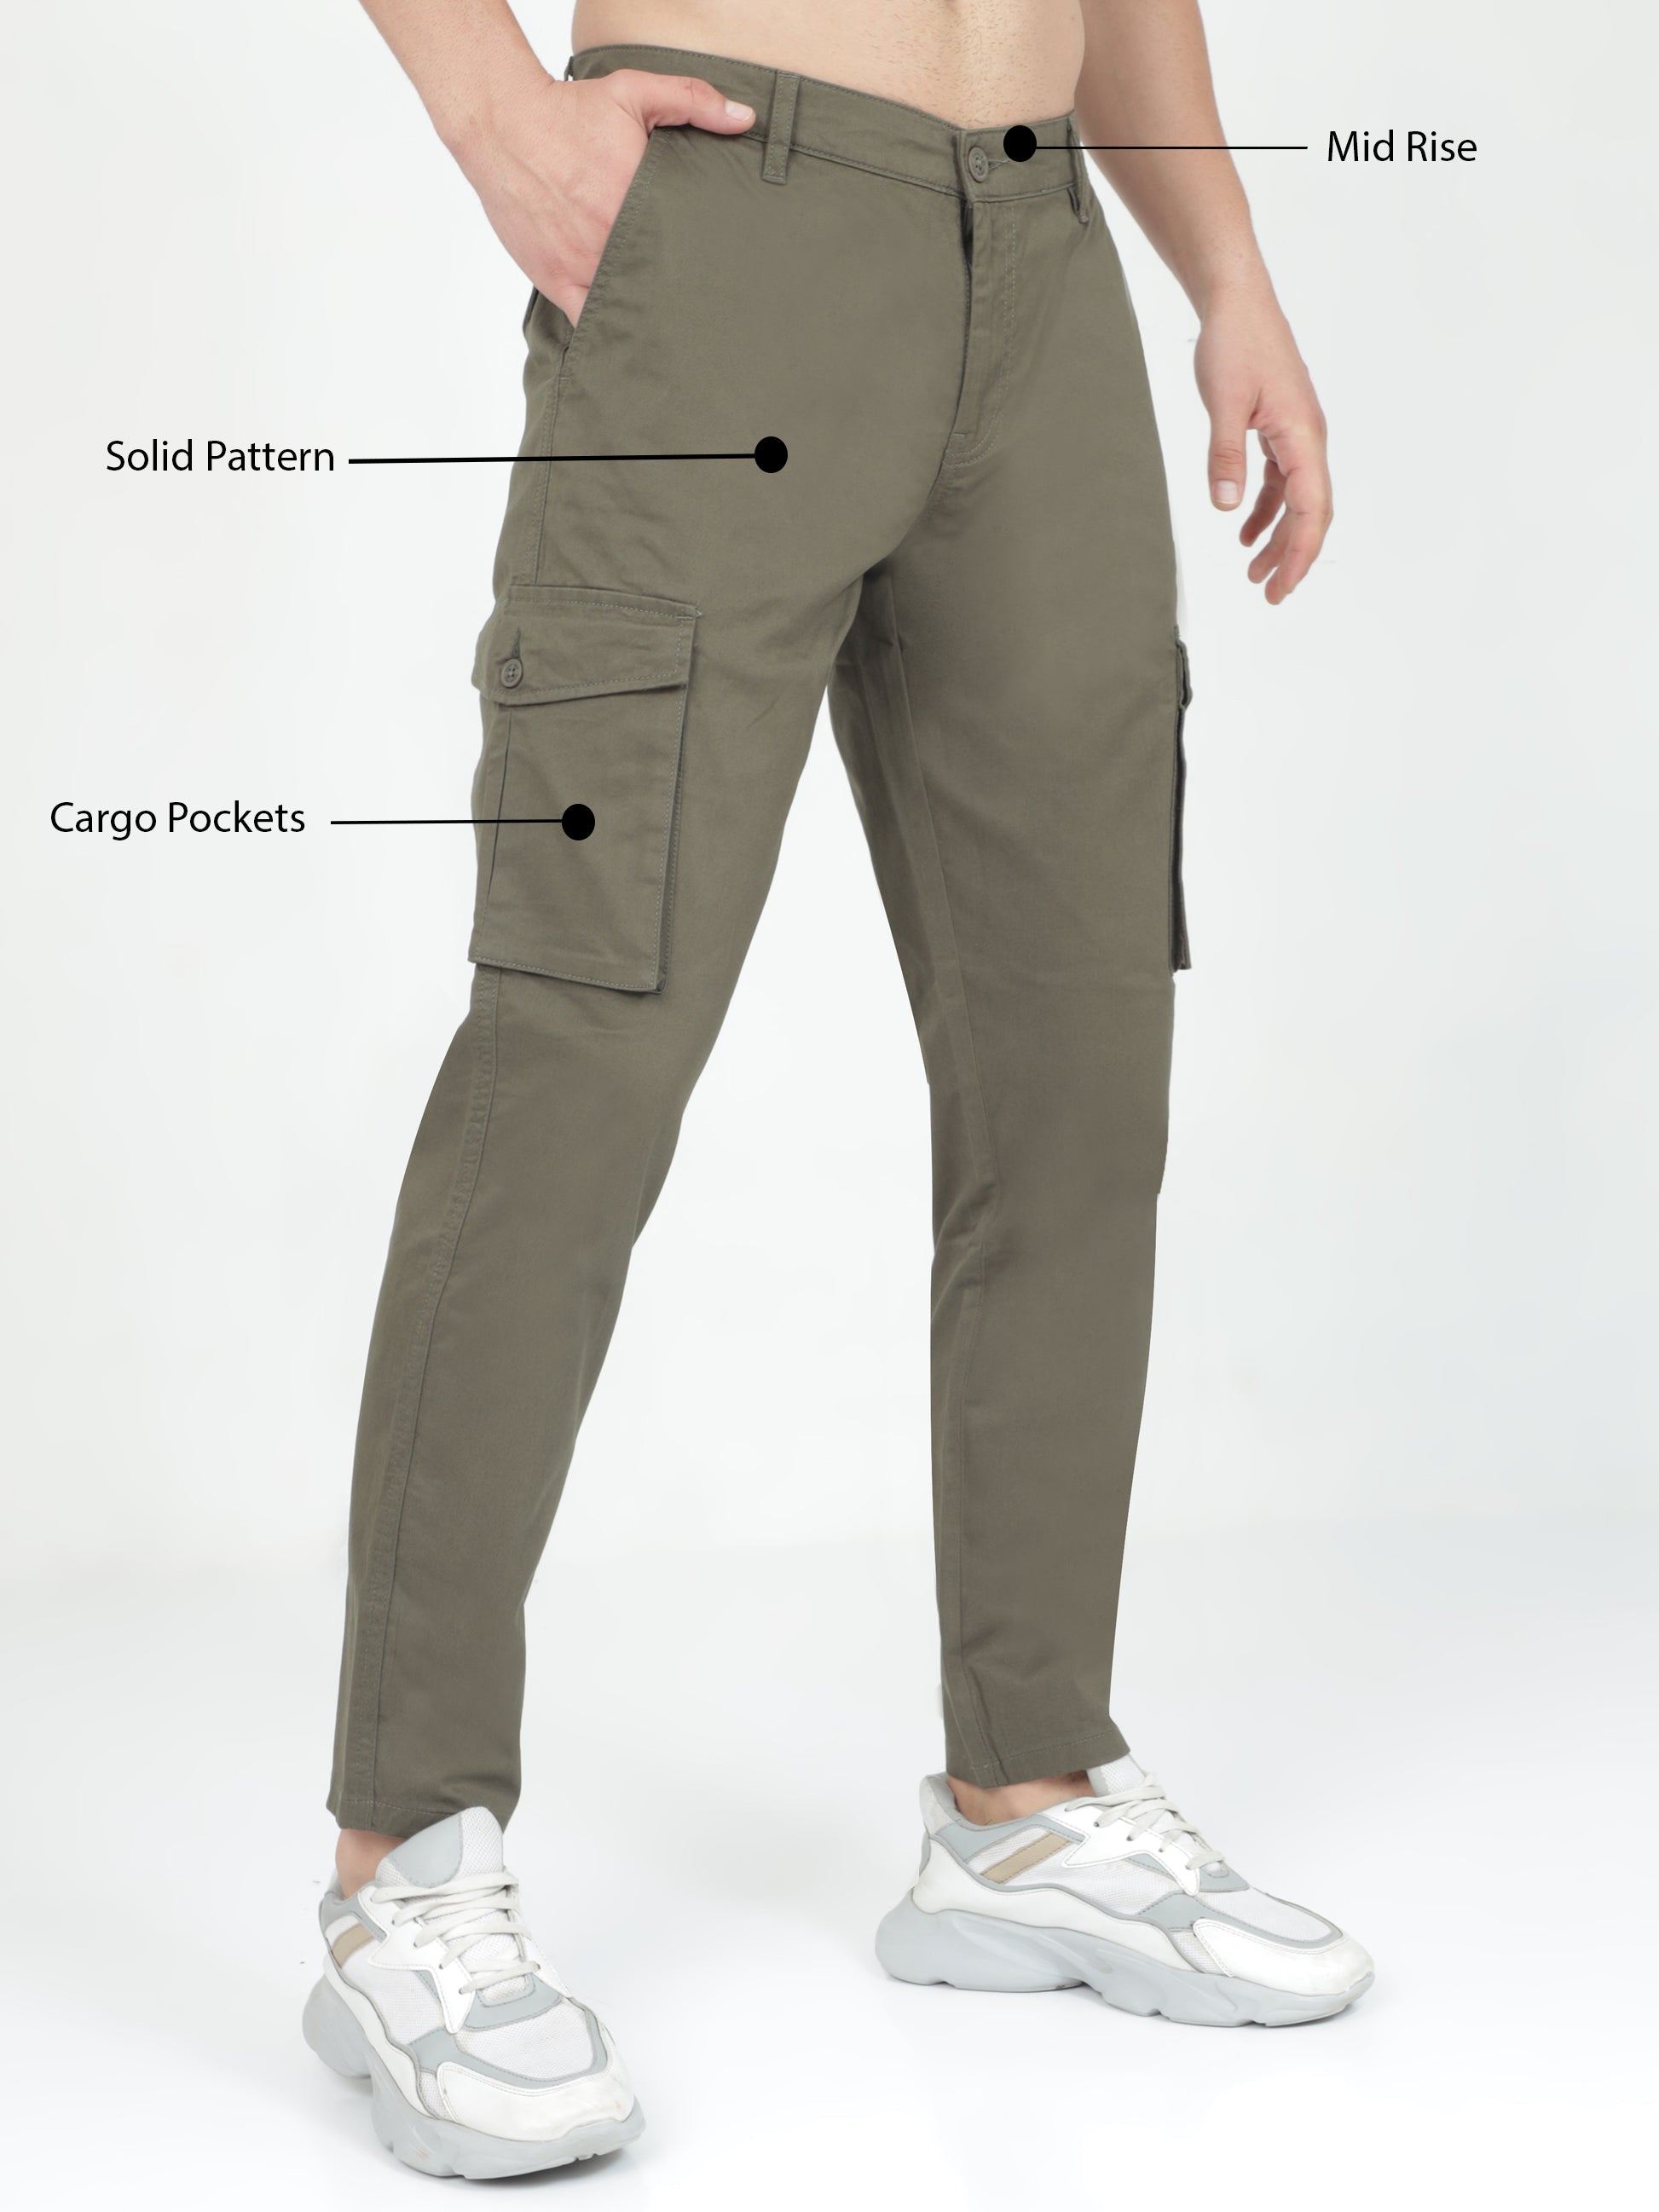 Strap and Stash Multi Pocket Cargo Pant